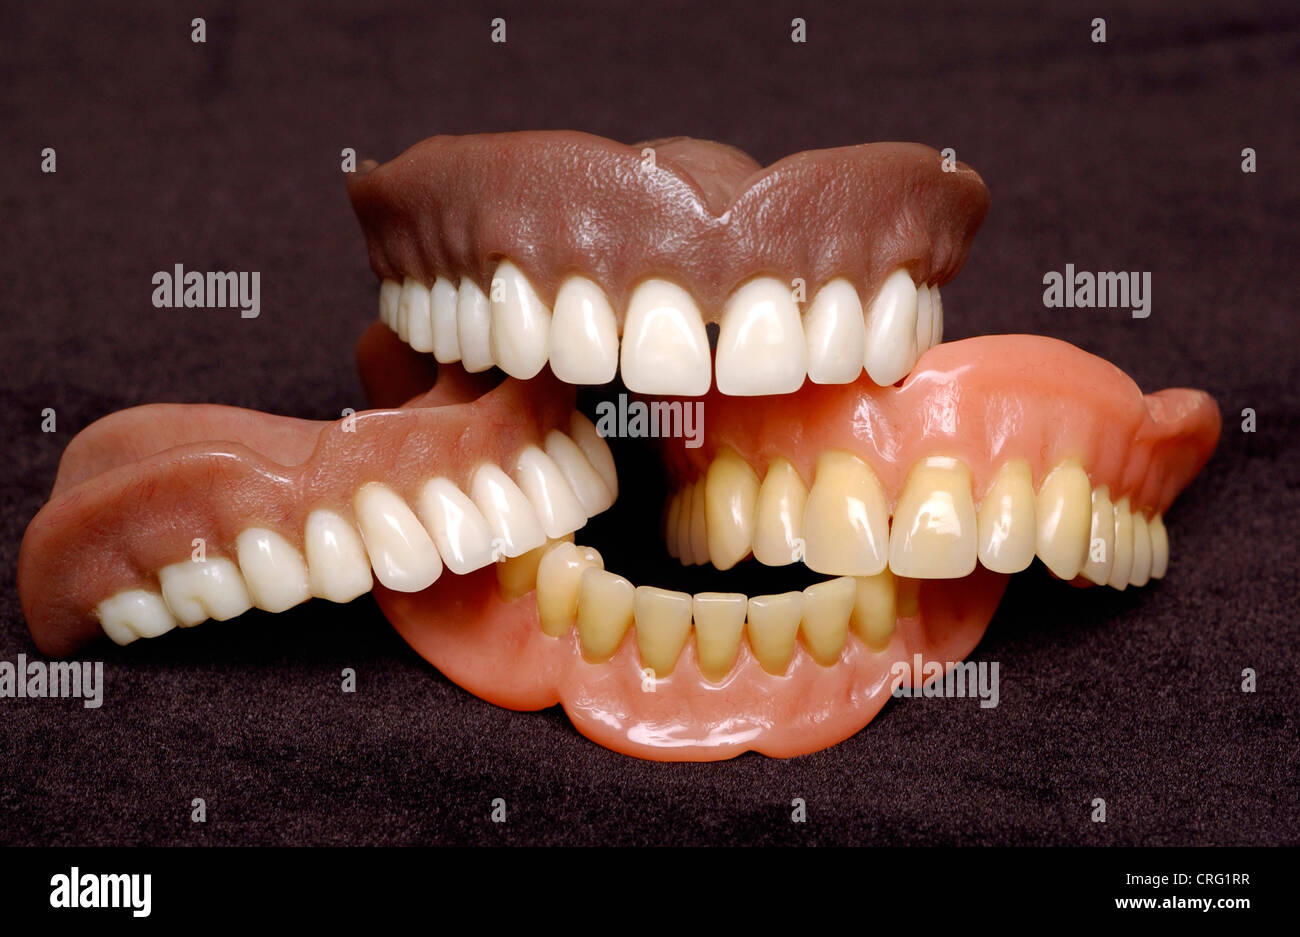 Denti finti Falsies per maschi Foto stock - Alamy